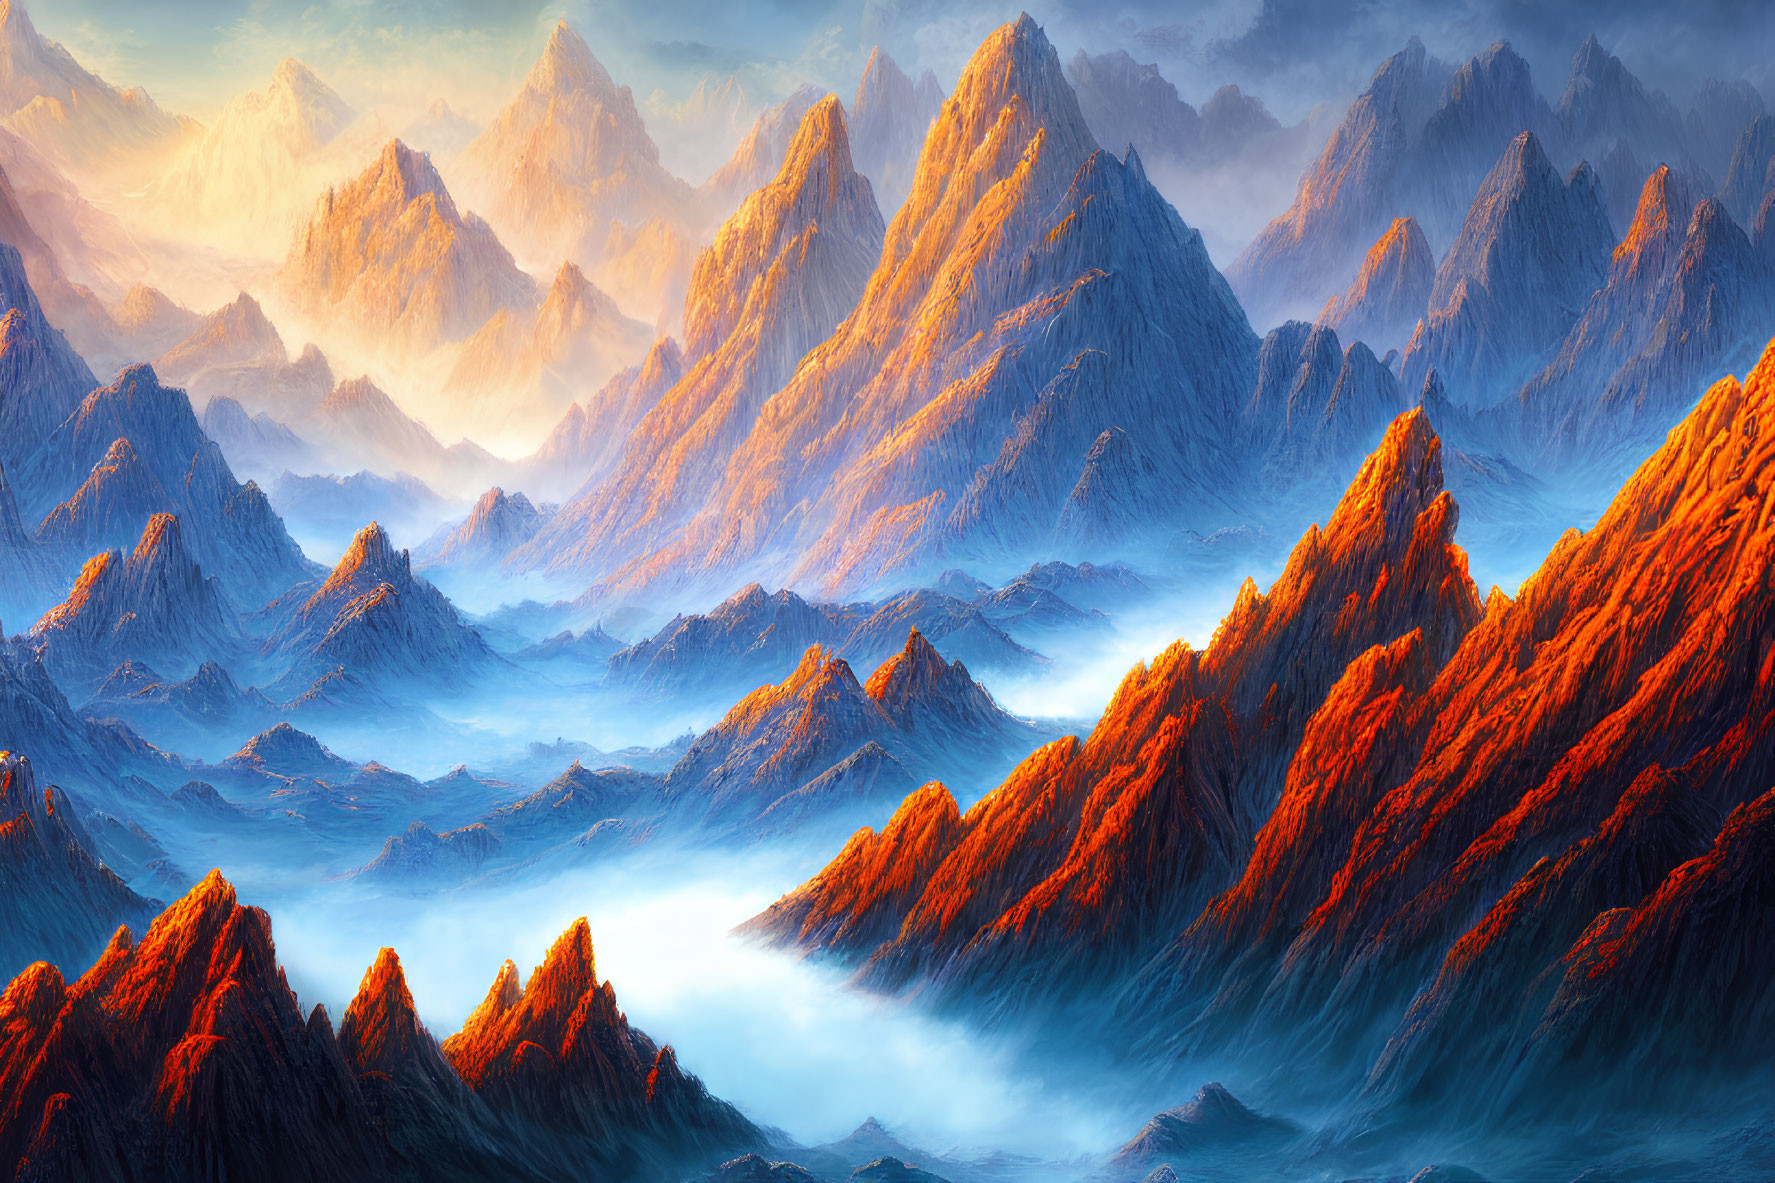 Vibrant orange peaks in surreal landscape with blue mist